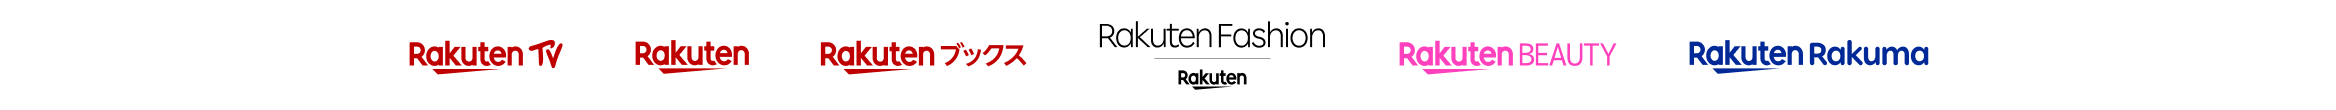 Rakuten TV,Rakuten市場,Rakuten ブックス,Rakuten BEAUTY,RakutenFashion,Rakuten Rakuma